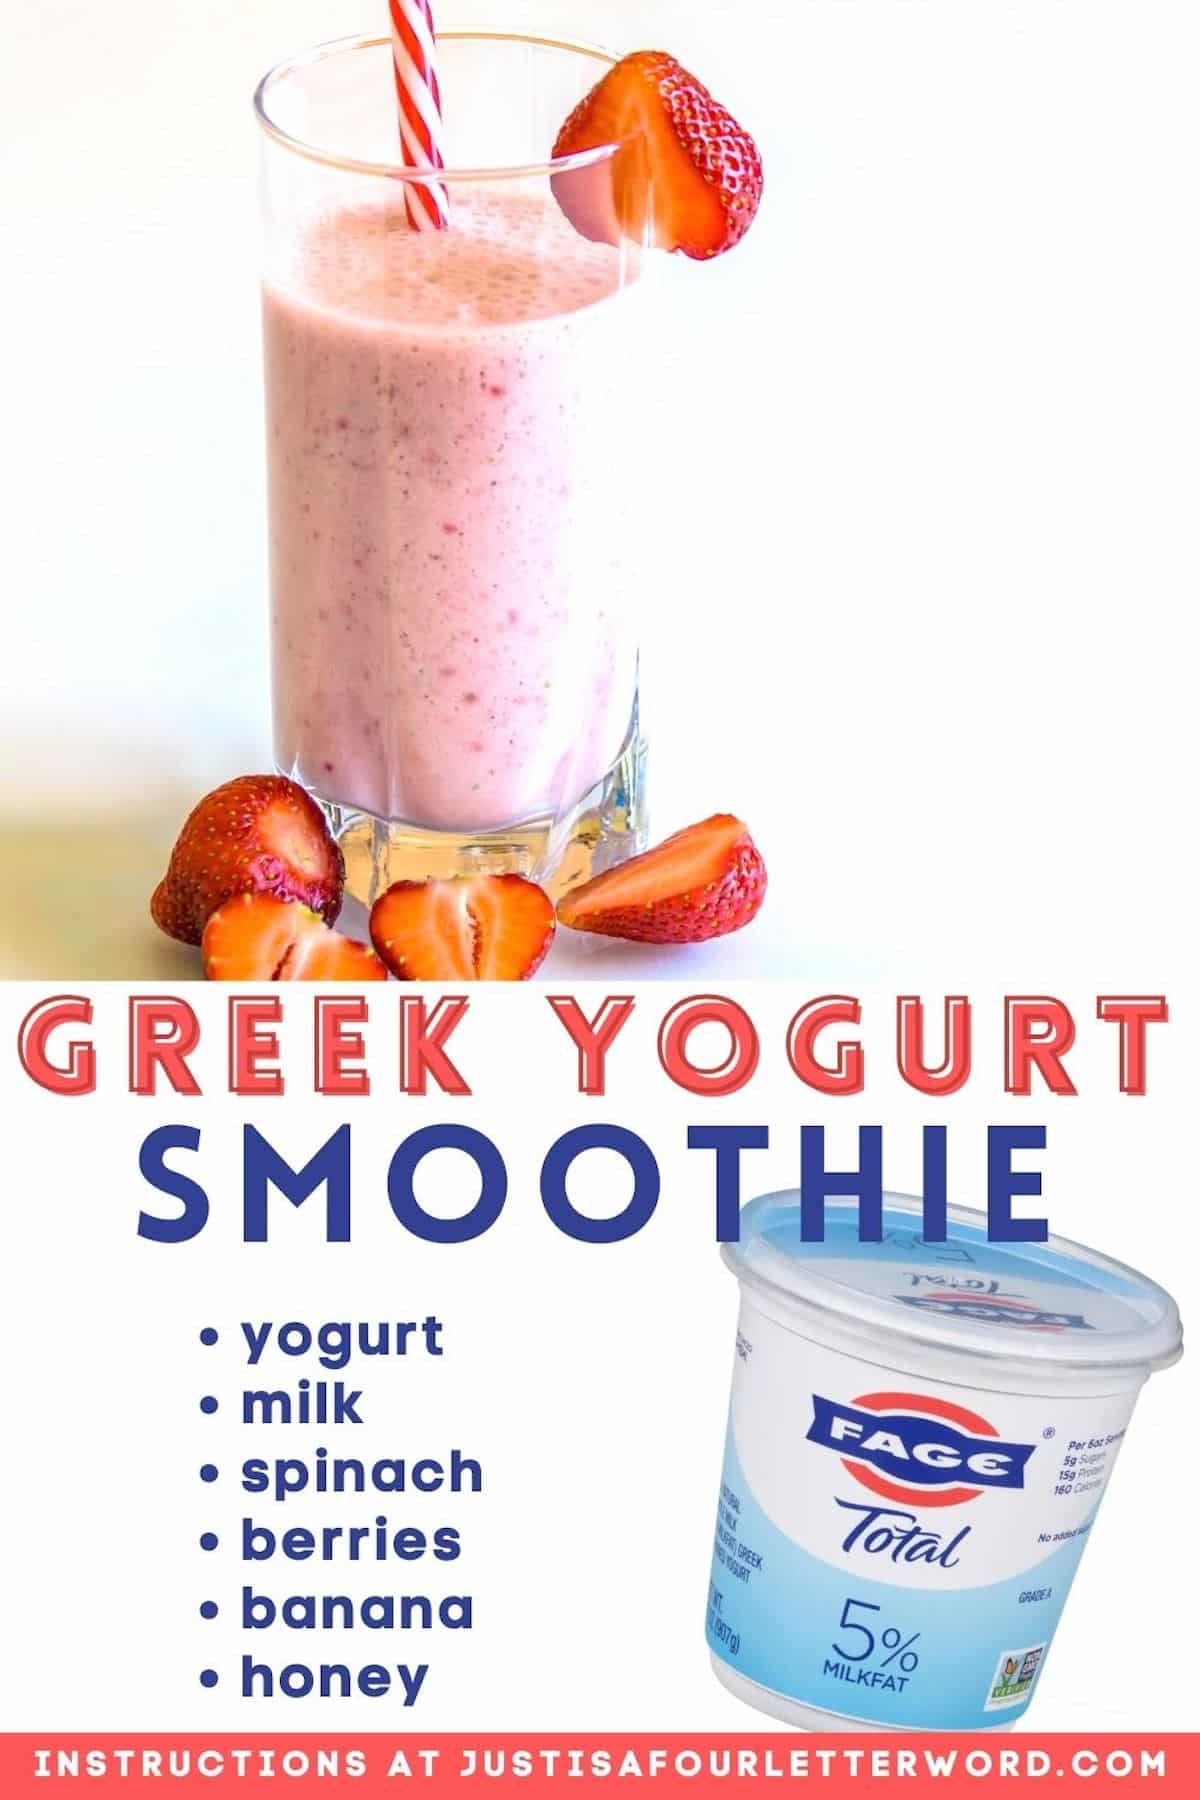 greek yogurt smoothie sharing image with text